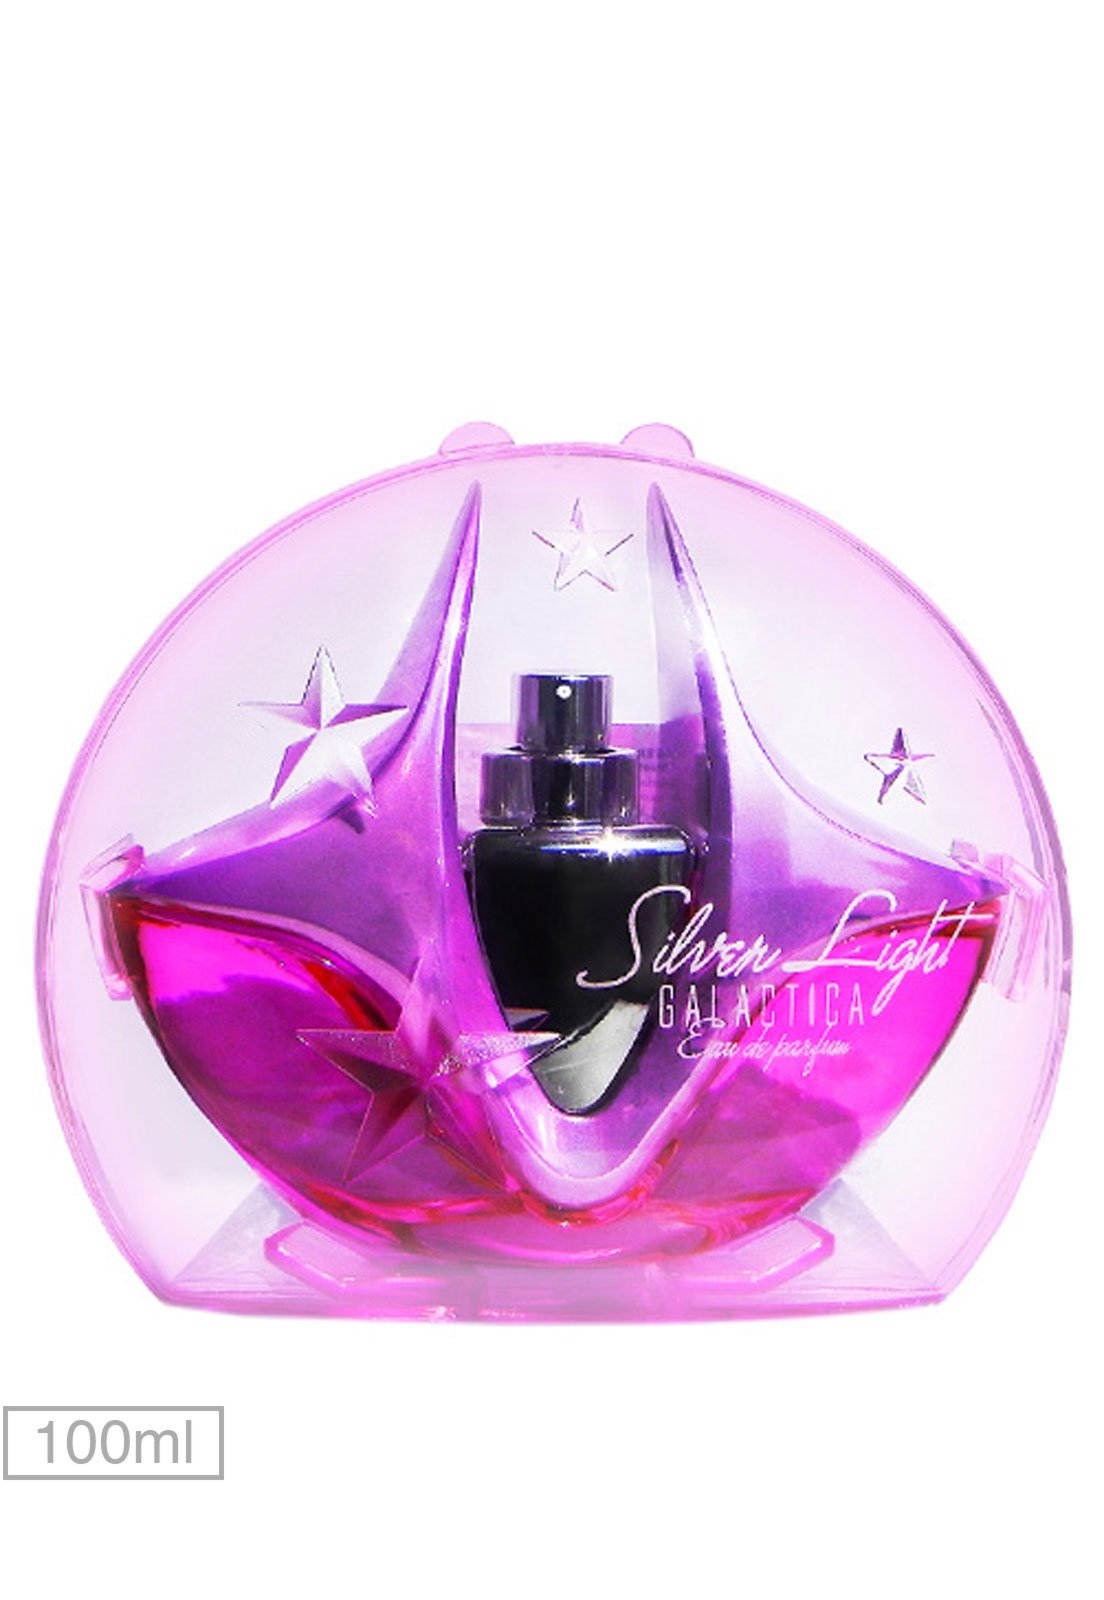 silverlight galactica perfume